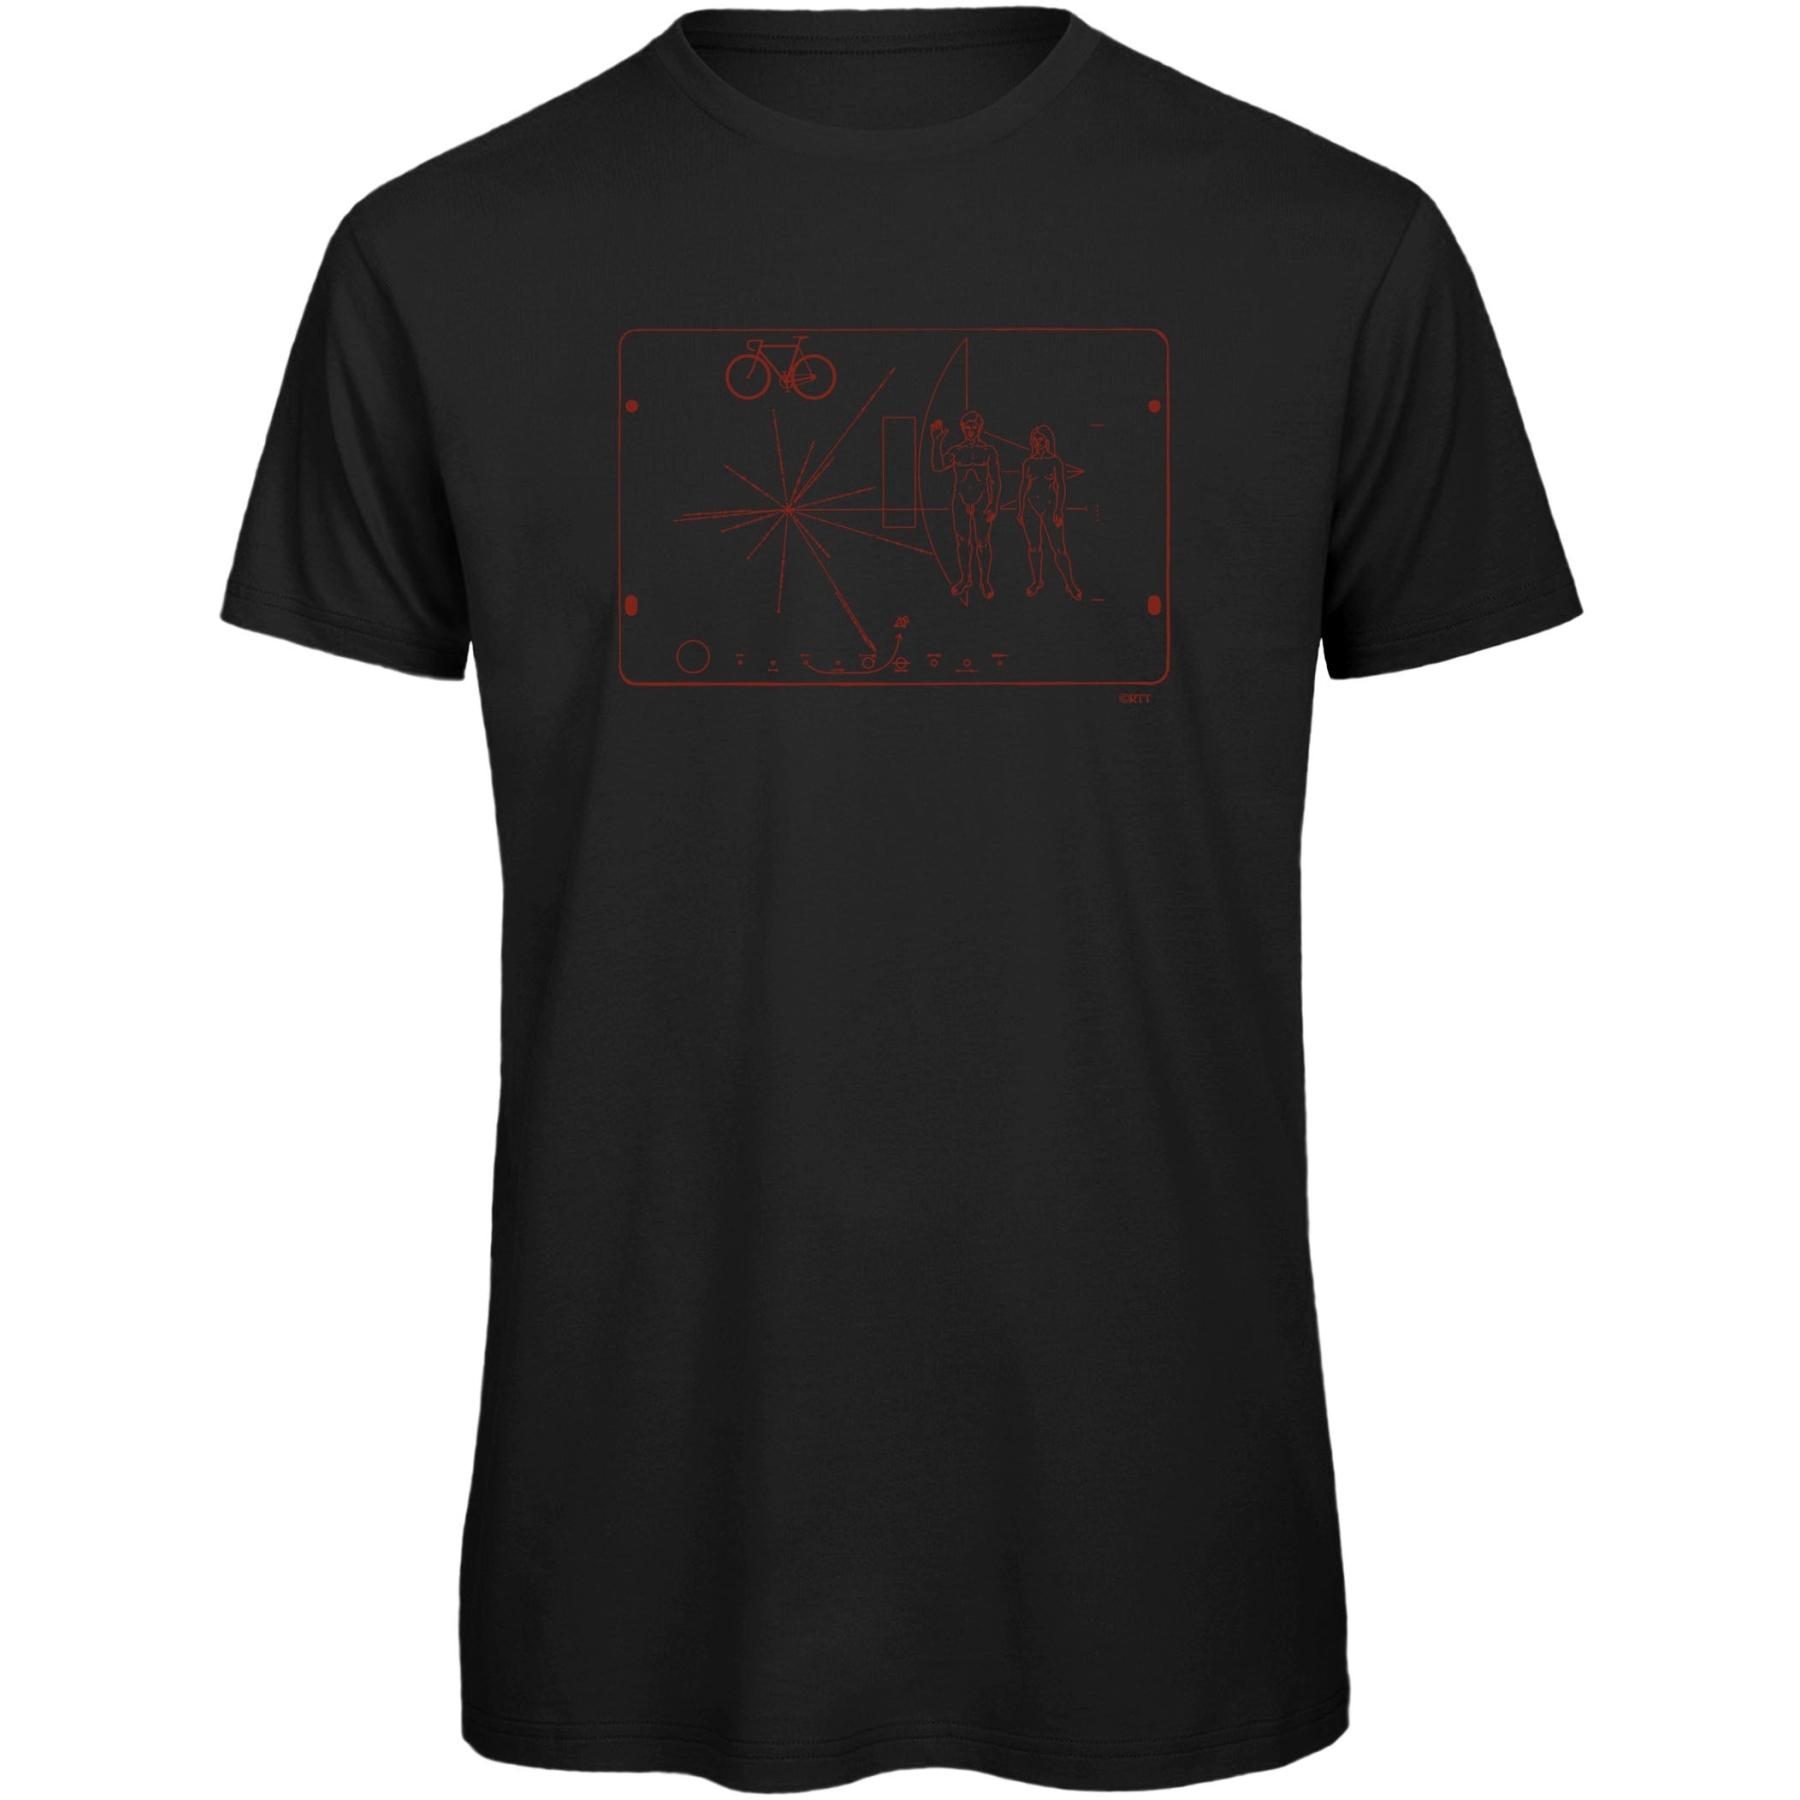 Imagen de RTTshirts Camiseta Bicicleta - Pioneer - negro